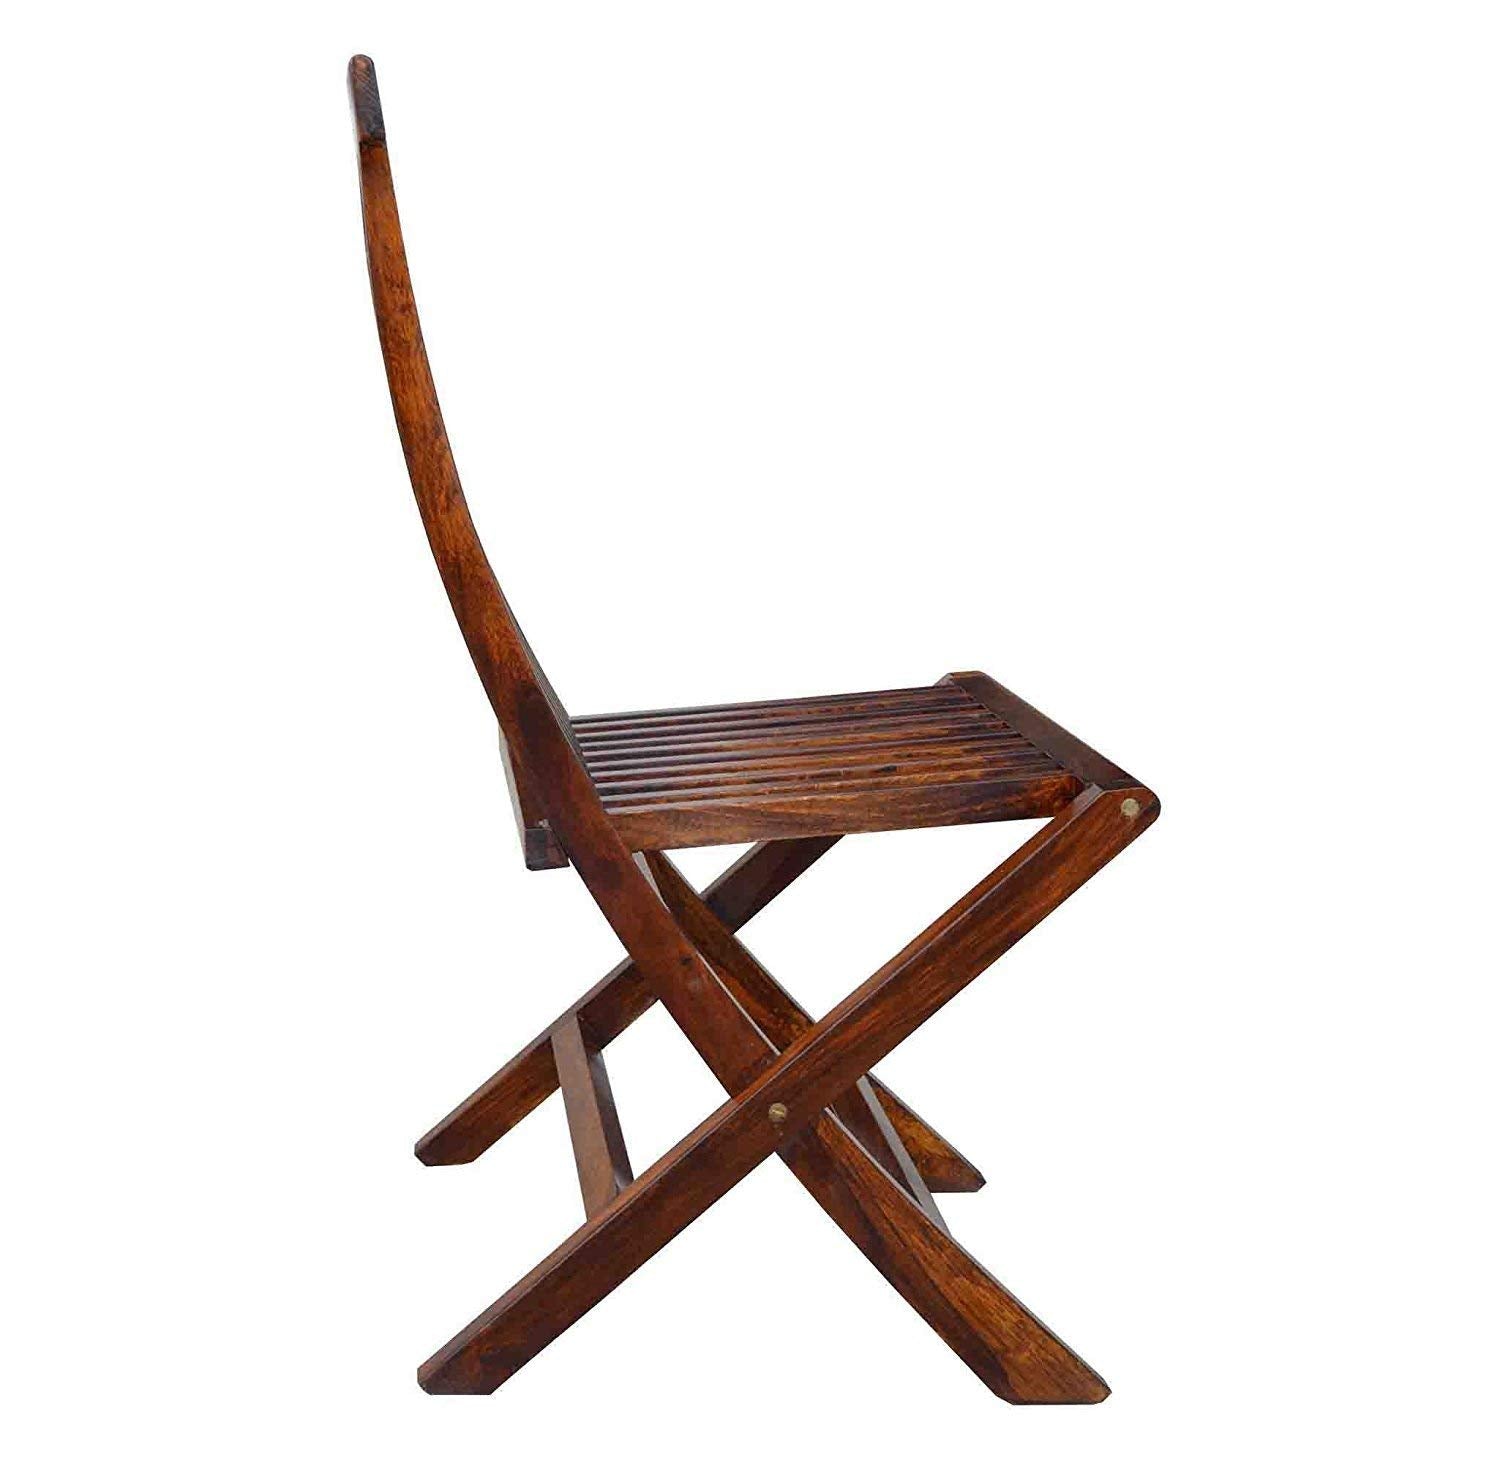 Driftingwood Sheesham Wood Round Dining Table Set And Folding Chairs F